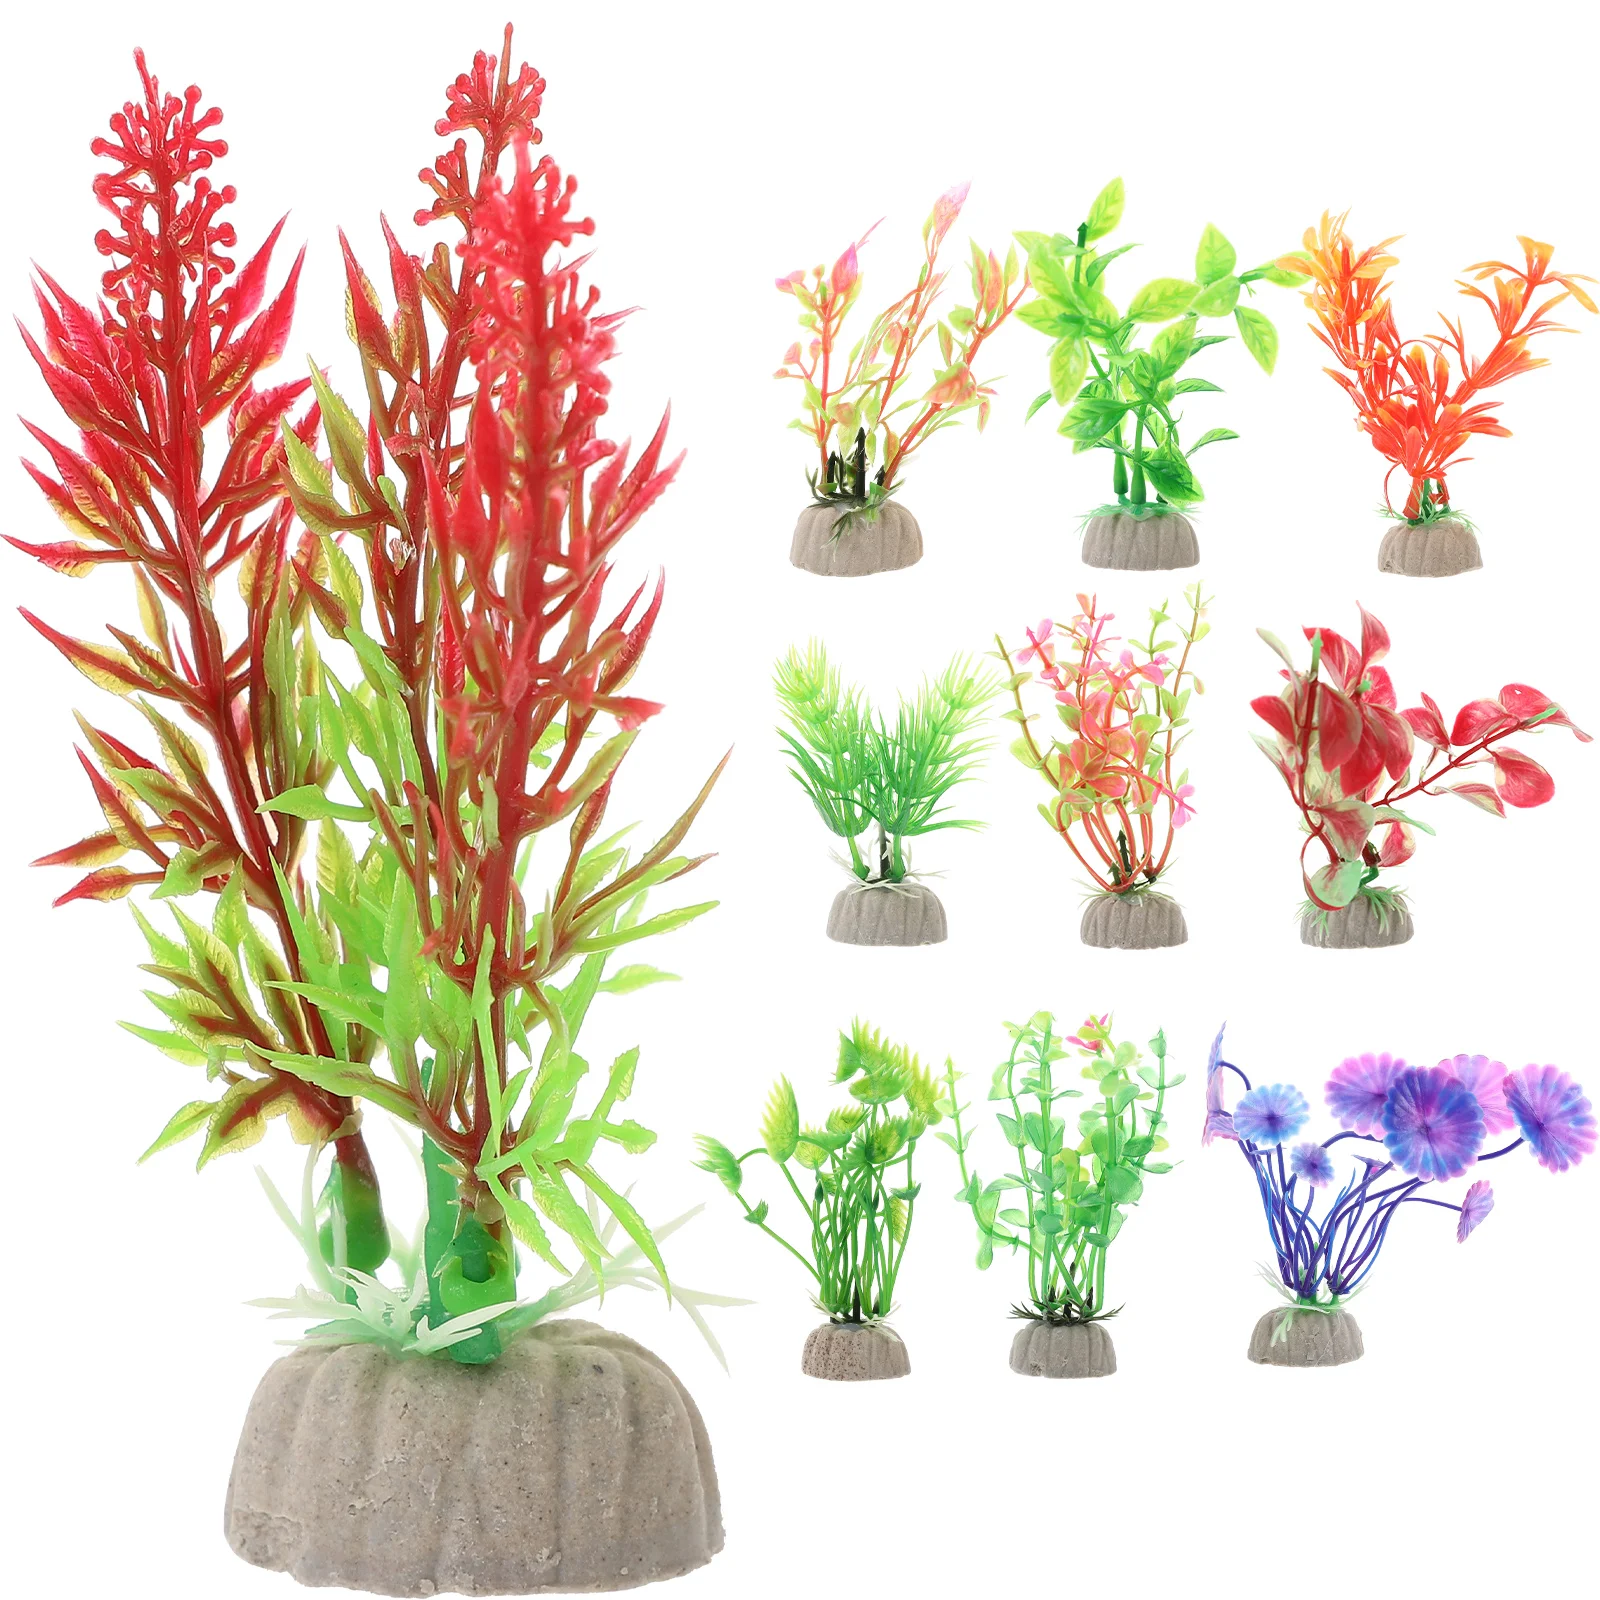 

10 Pcs Small Accessories Fish Tank Plants Decorations Fake Aquarium Plastic Decors Large Tall